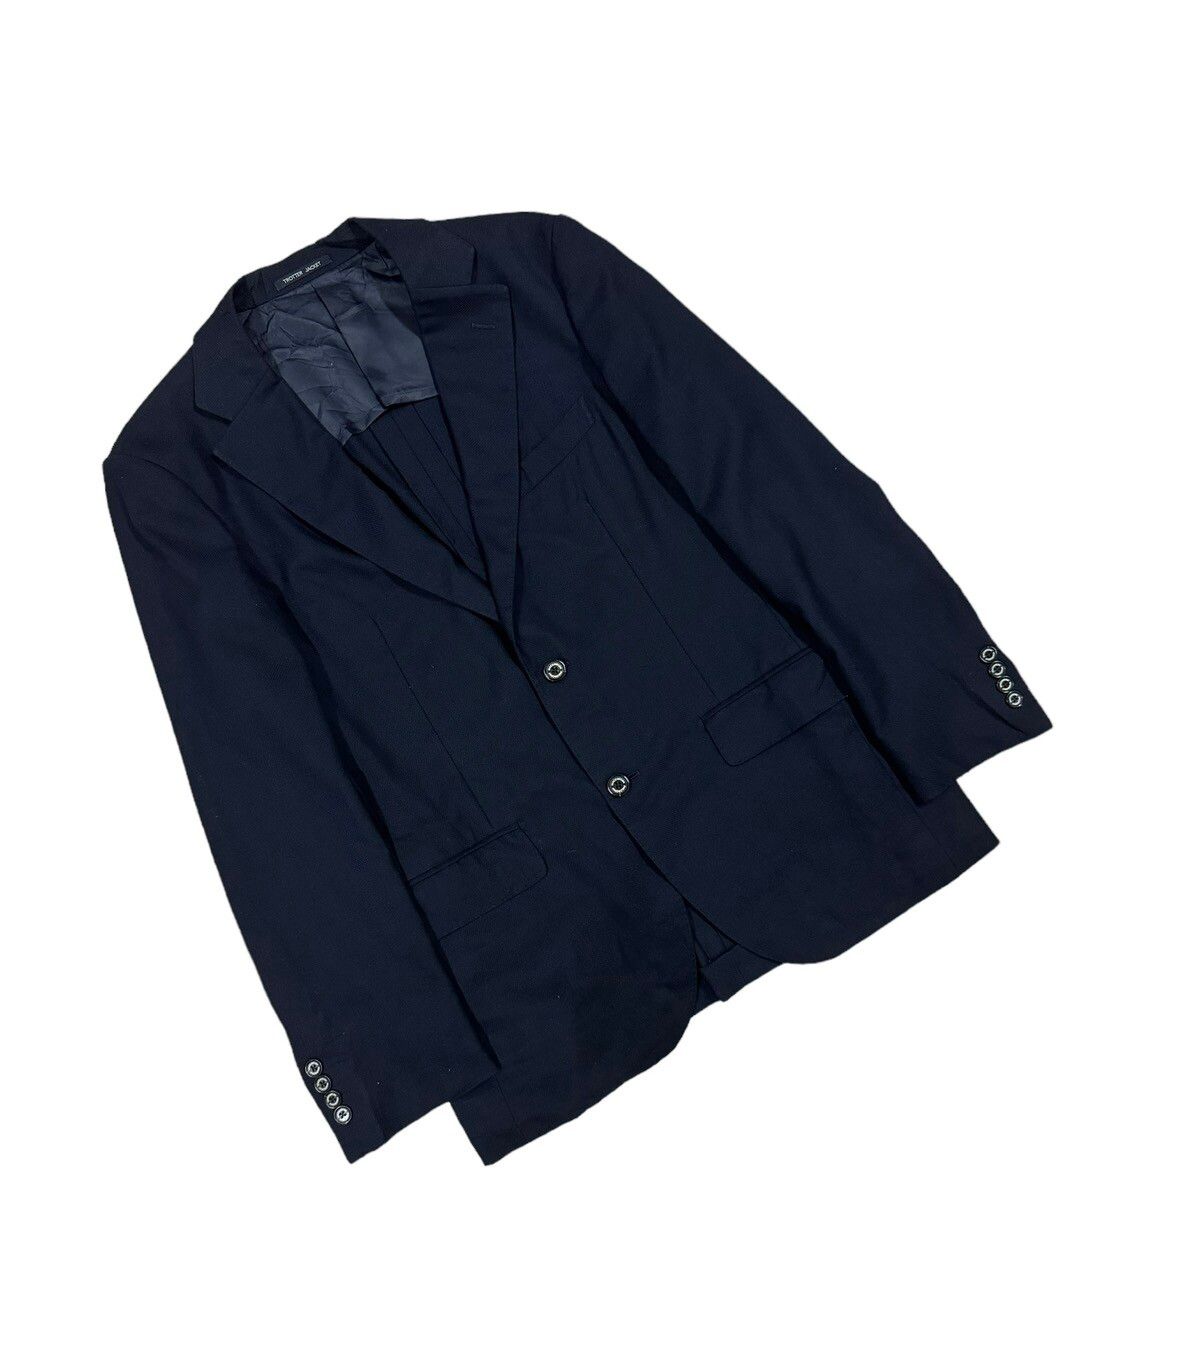 Mackintosh Philosophy Blazer Jacket Suit - 5